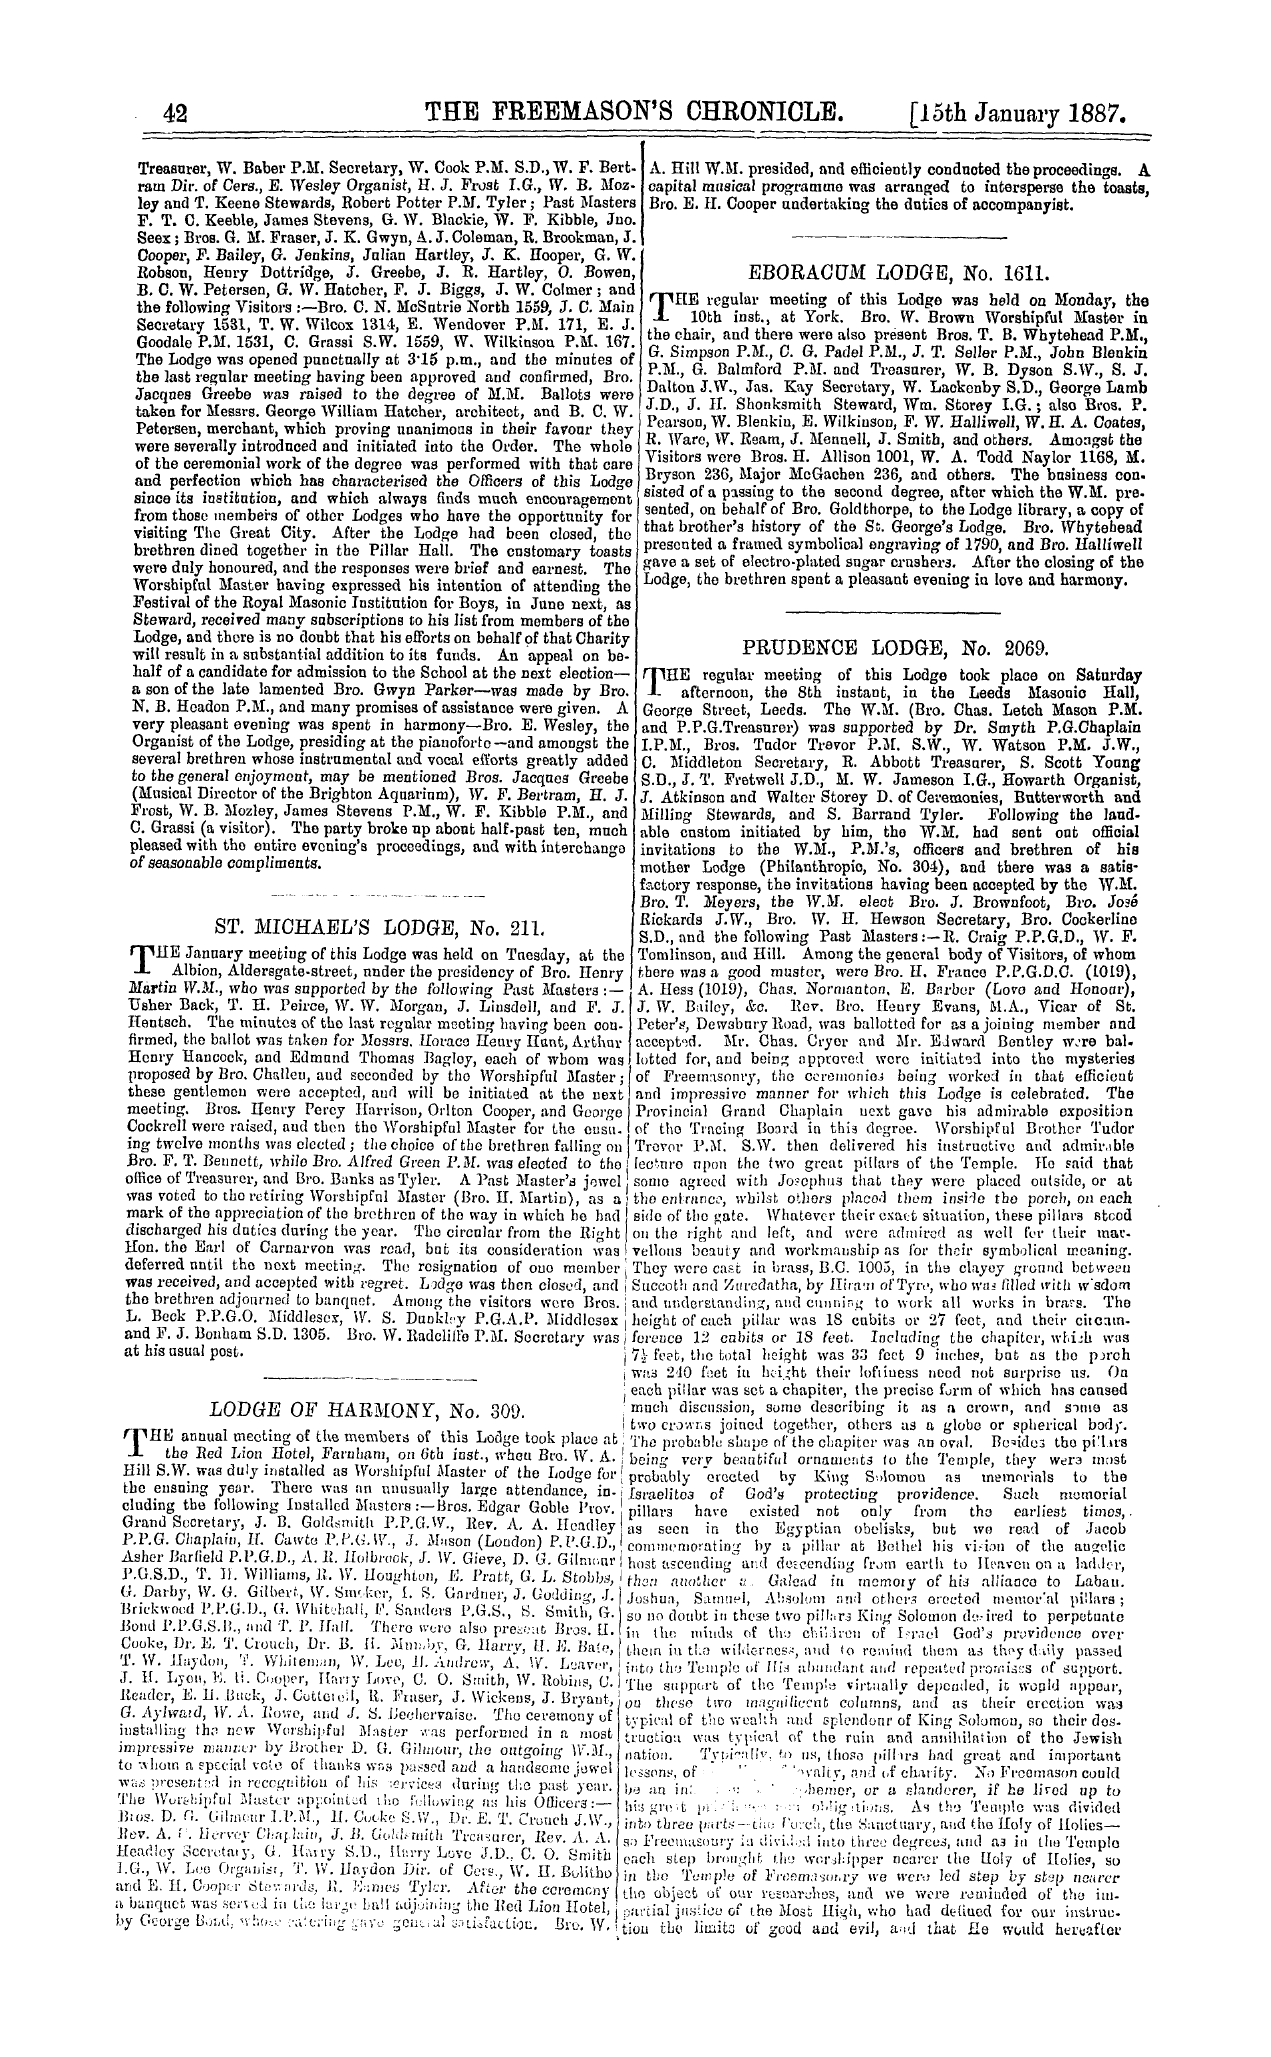 The Freemason's Chronicle: 1887-01-15: 10